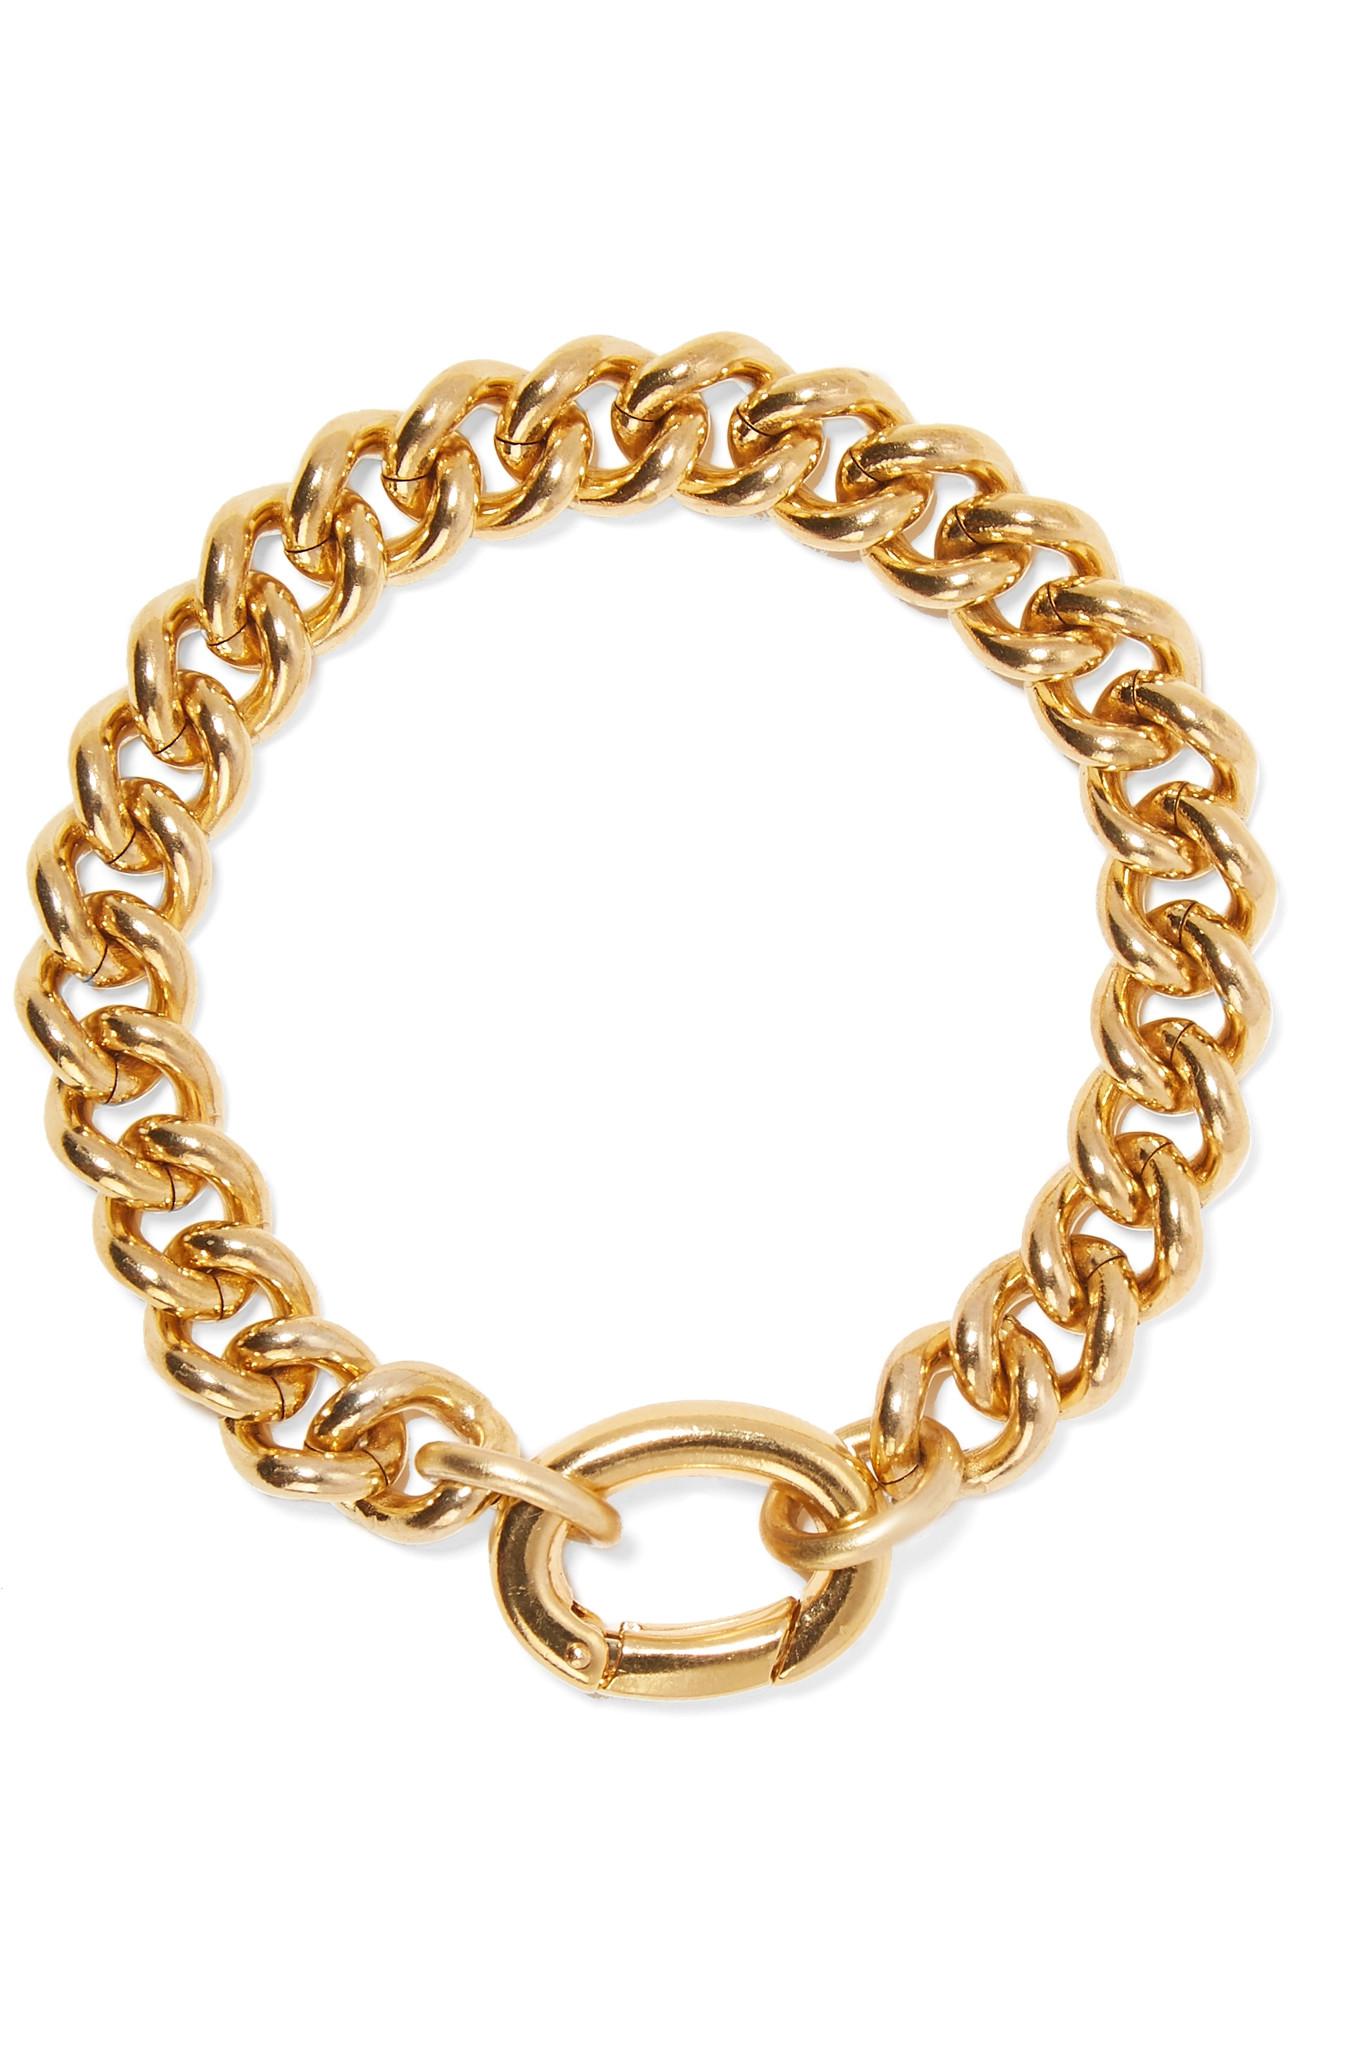 Lyst - Laura Lombardi Presa Gold-tone Bracelet in Metallic